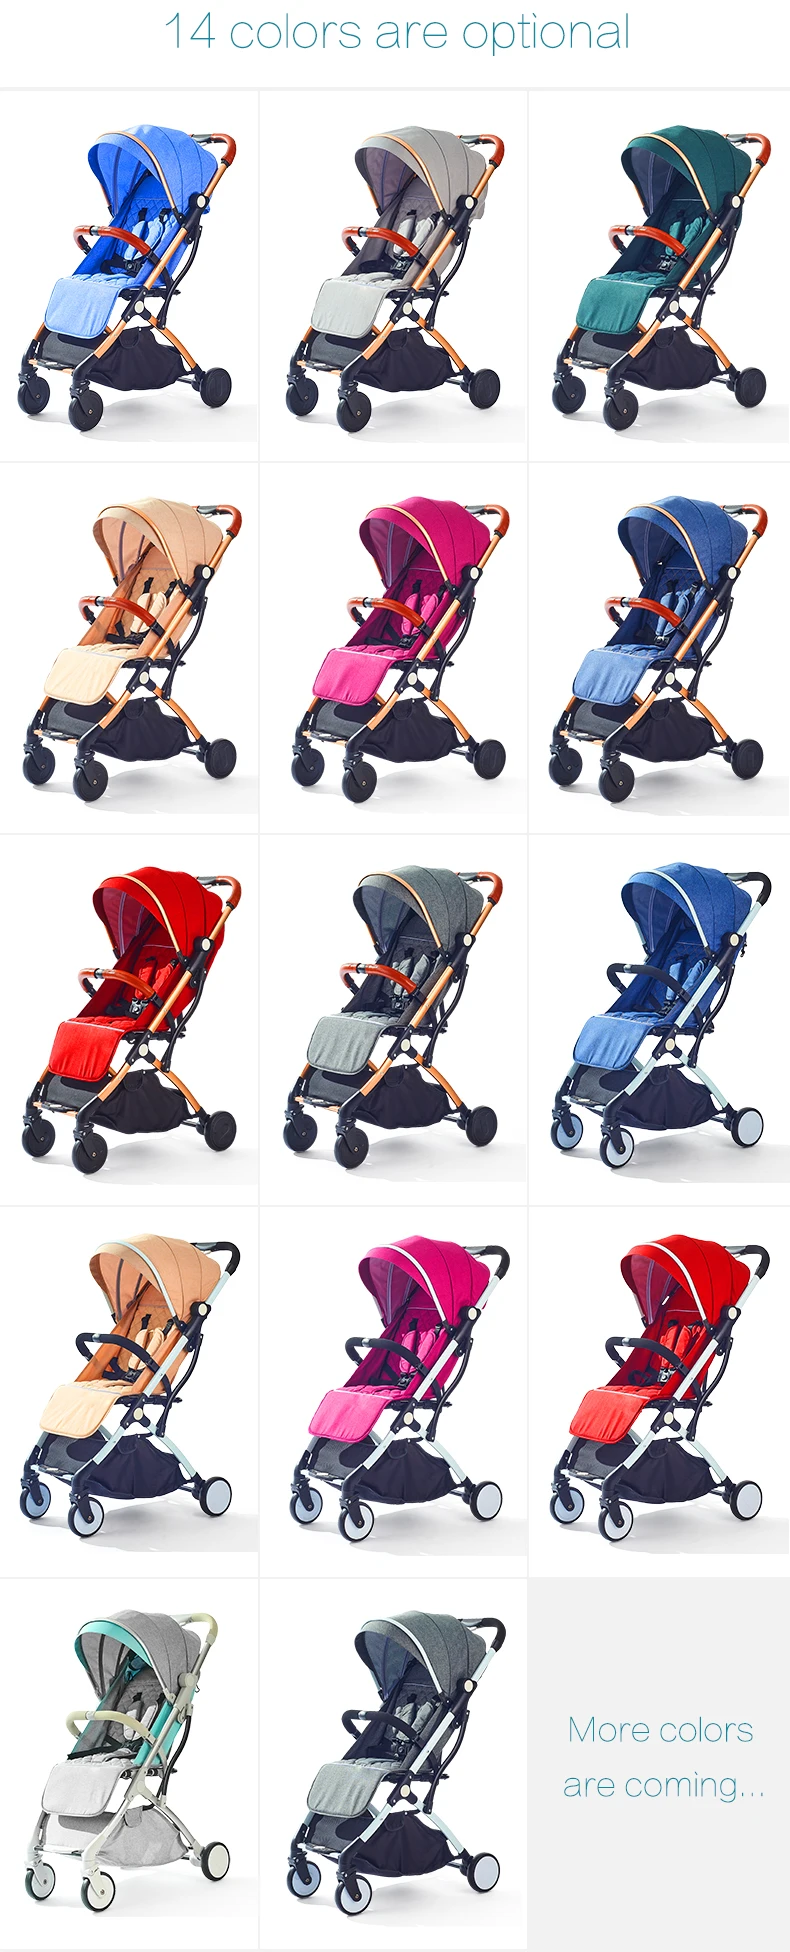 tianrui baby stroller review